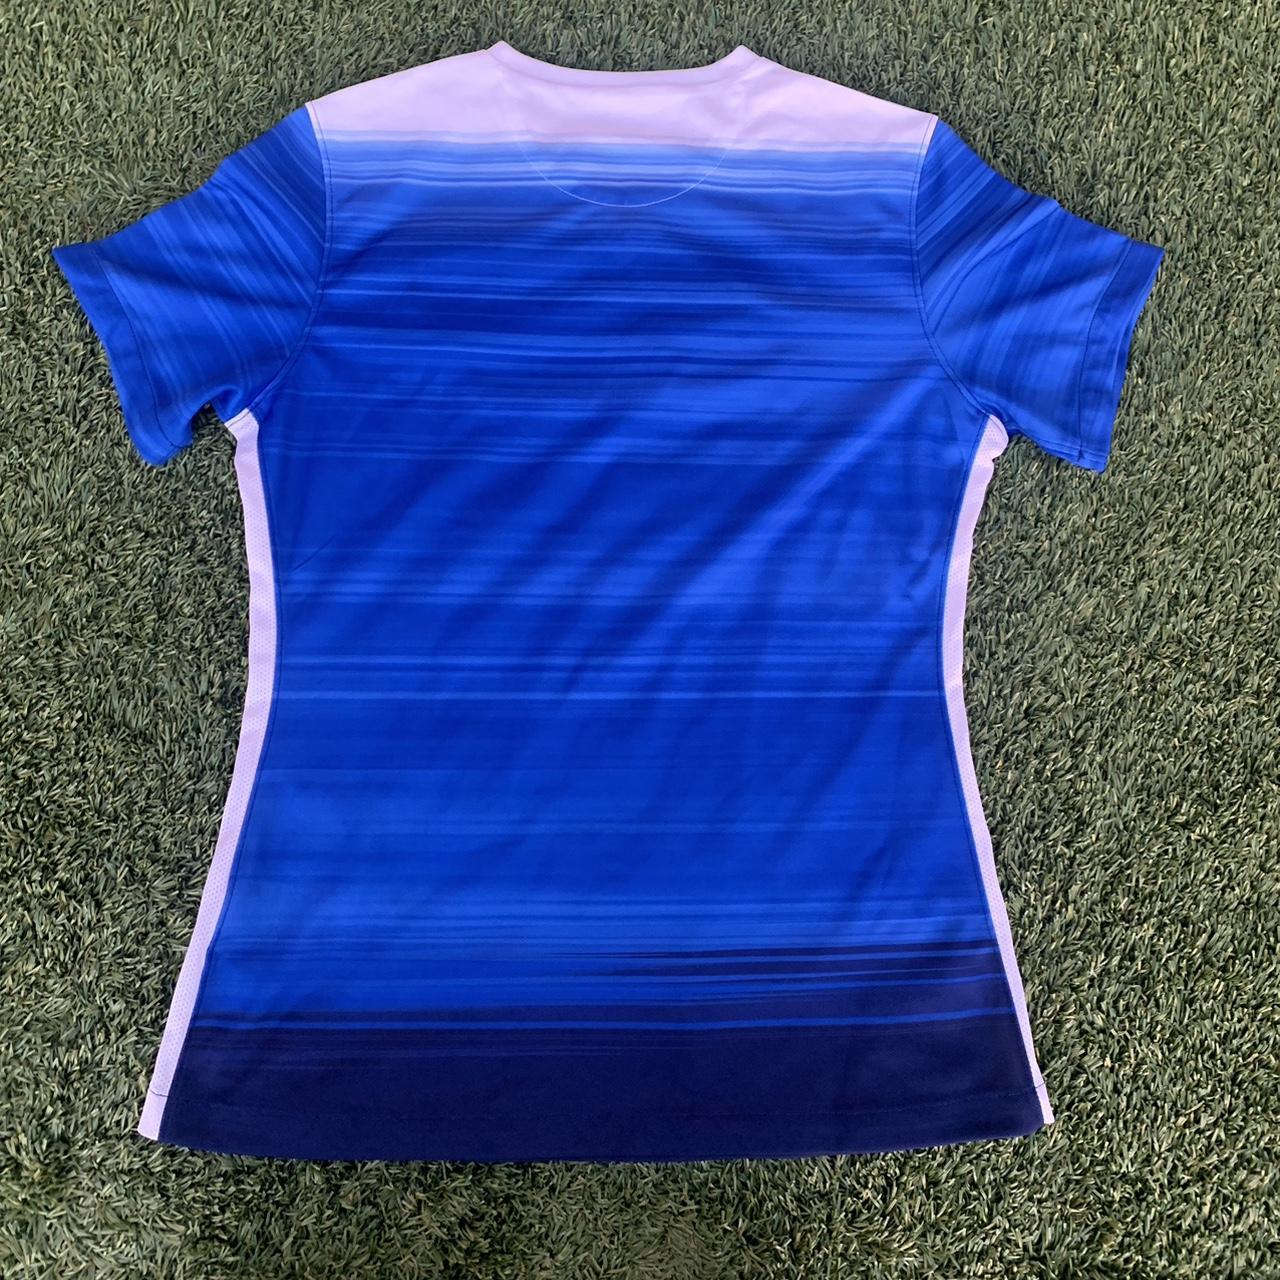 Nike Women's Blue and White Shirt (2)